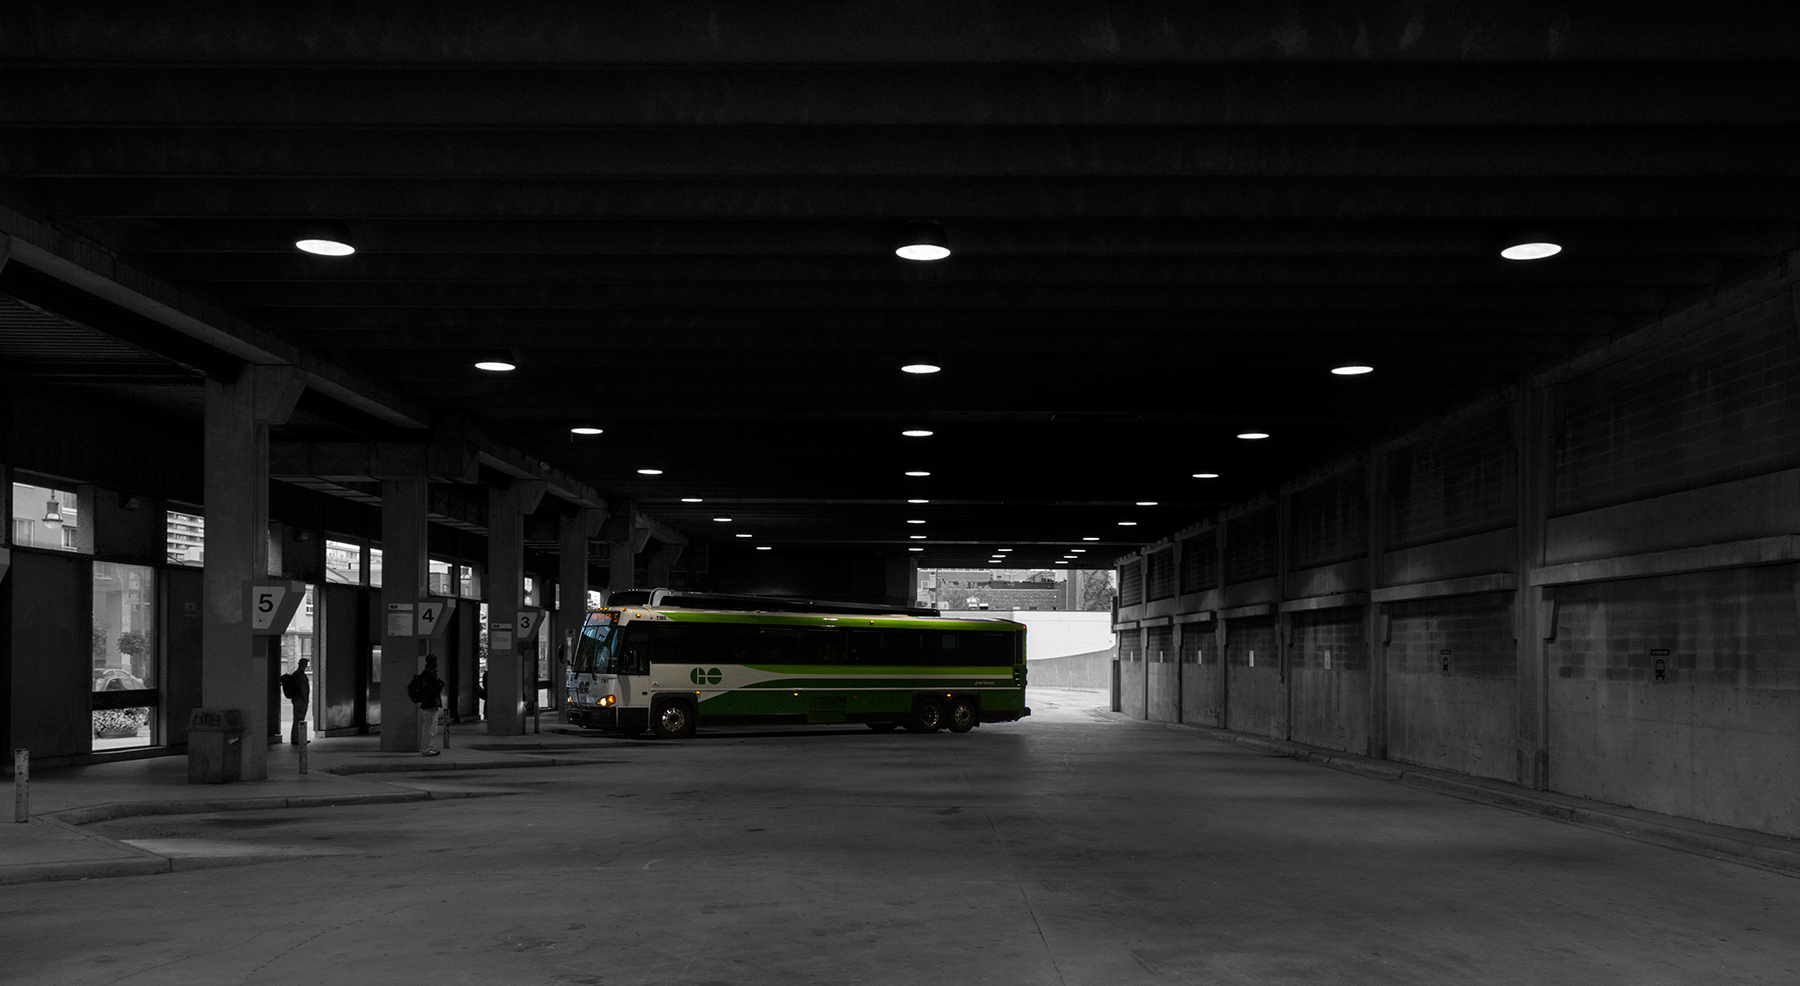 20151128B. A Green GO Bus pulls into Oshawa's grey concrete bus